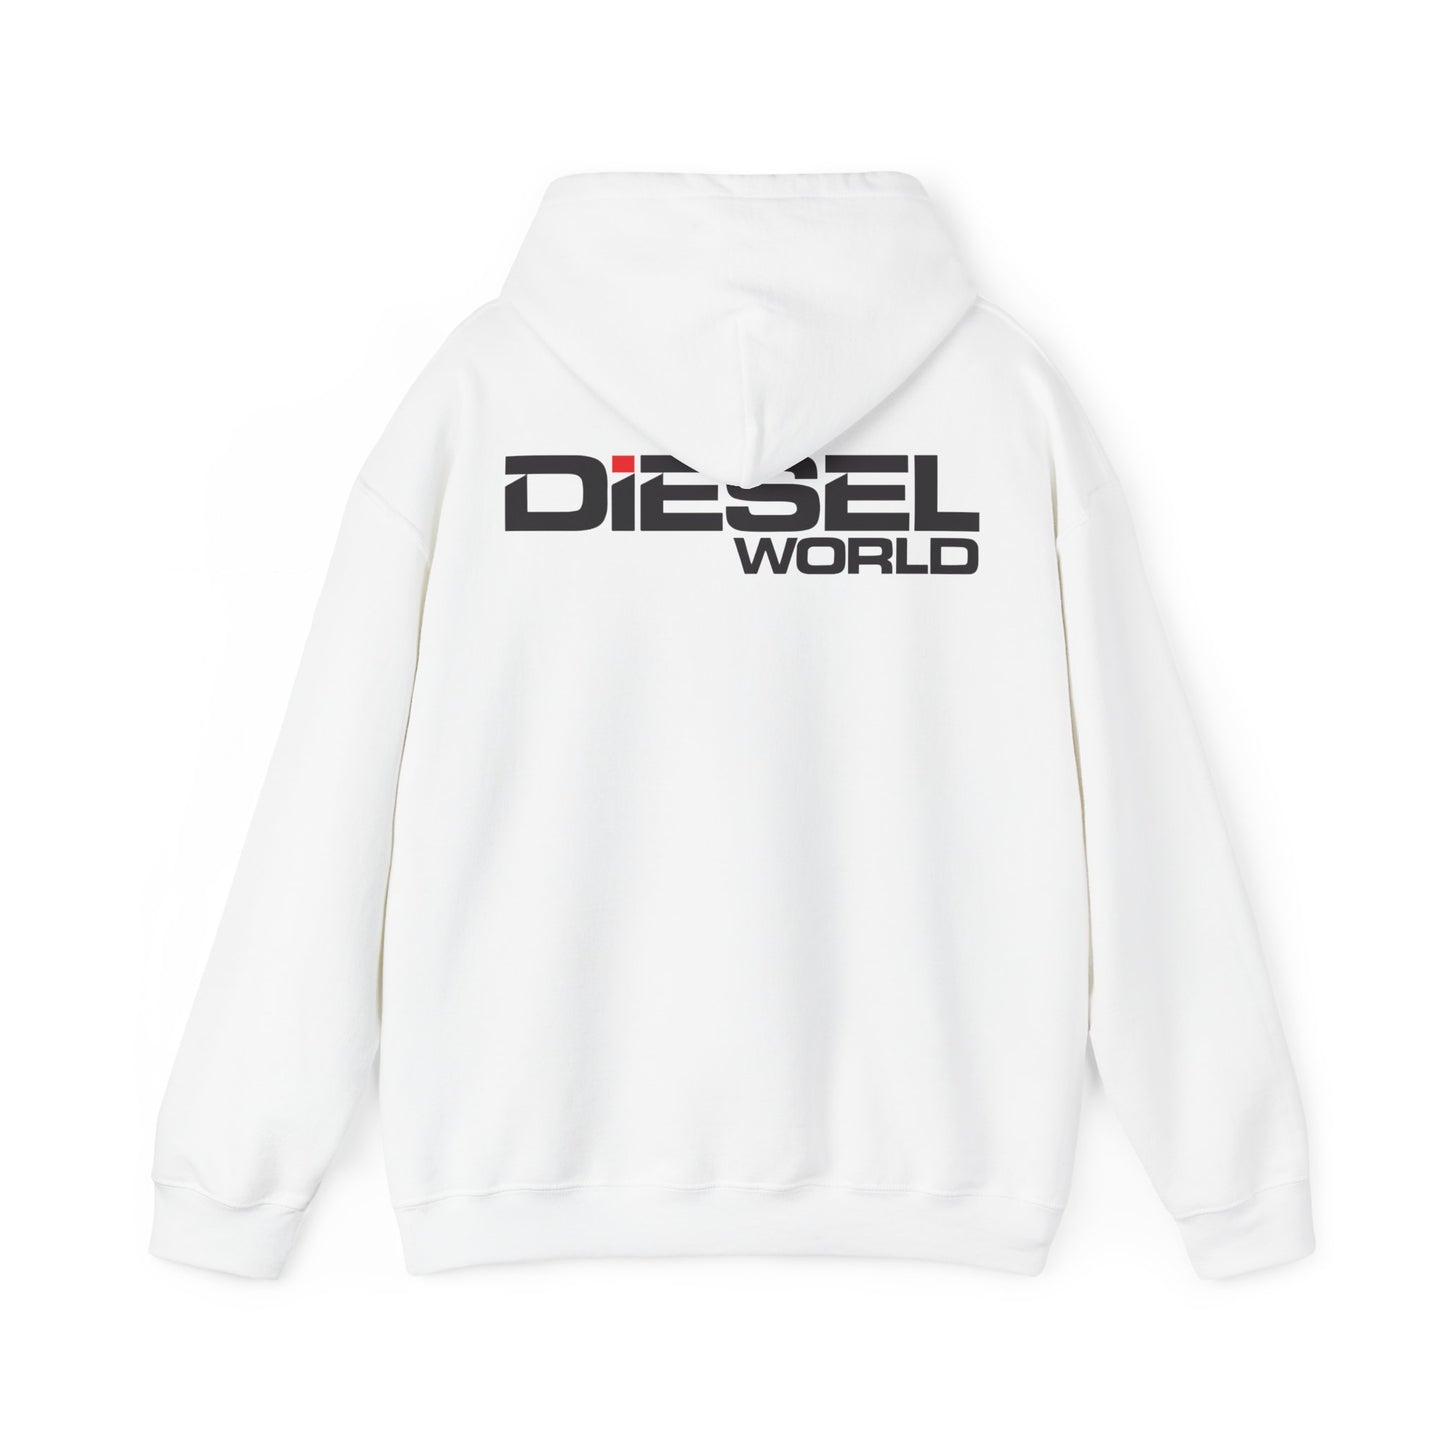 Diesel World - Unisex Heavy Blend™ Hooded Sweatshirt